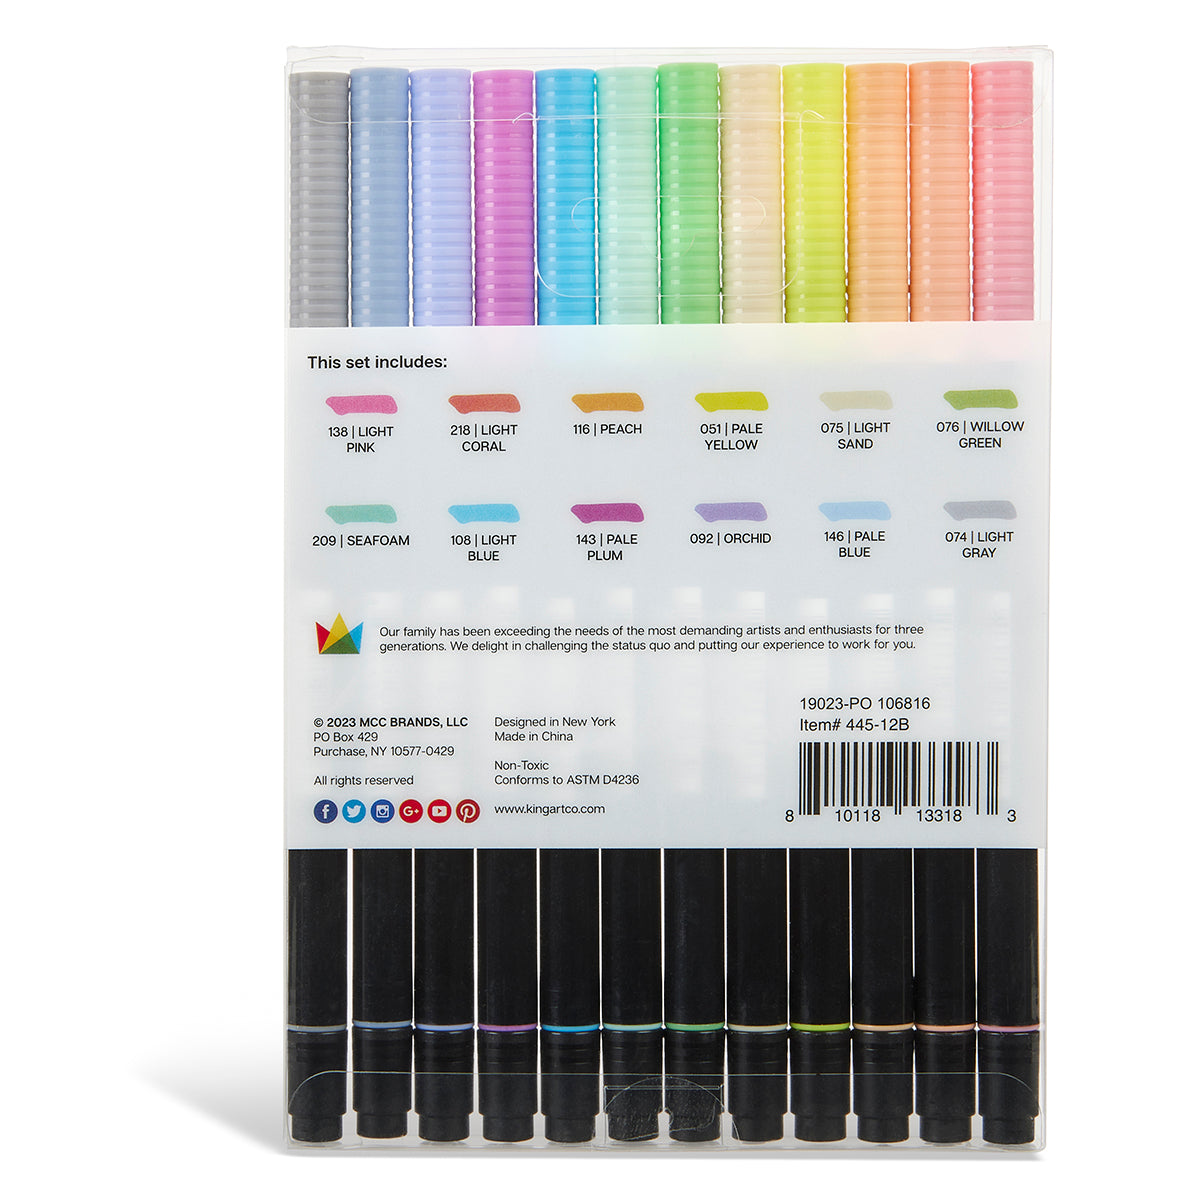 KINGART PRO Dual Twin-Tip Brush Pens, Set of 48 Unique & Vivid Colors, —  CHIMIYA